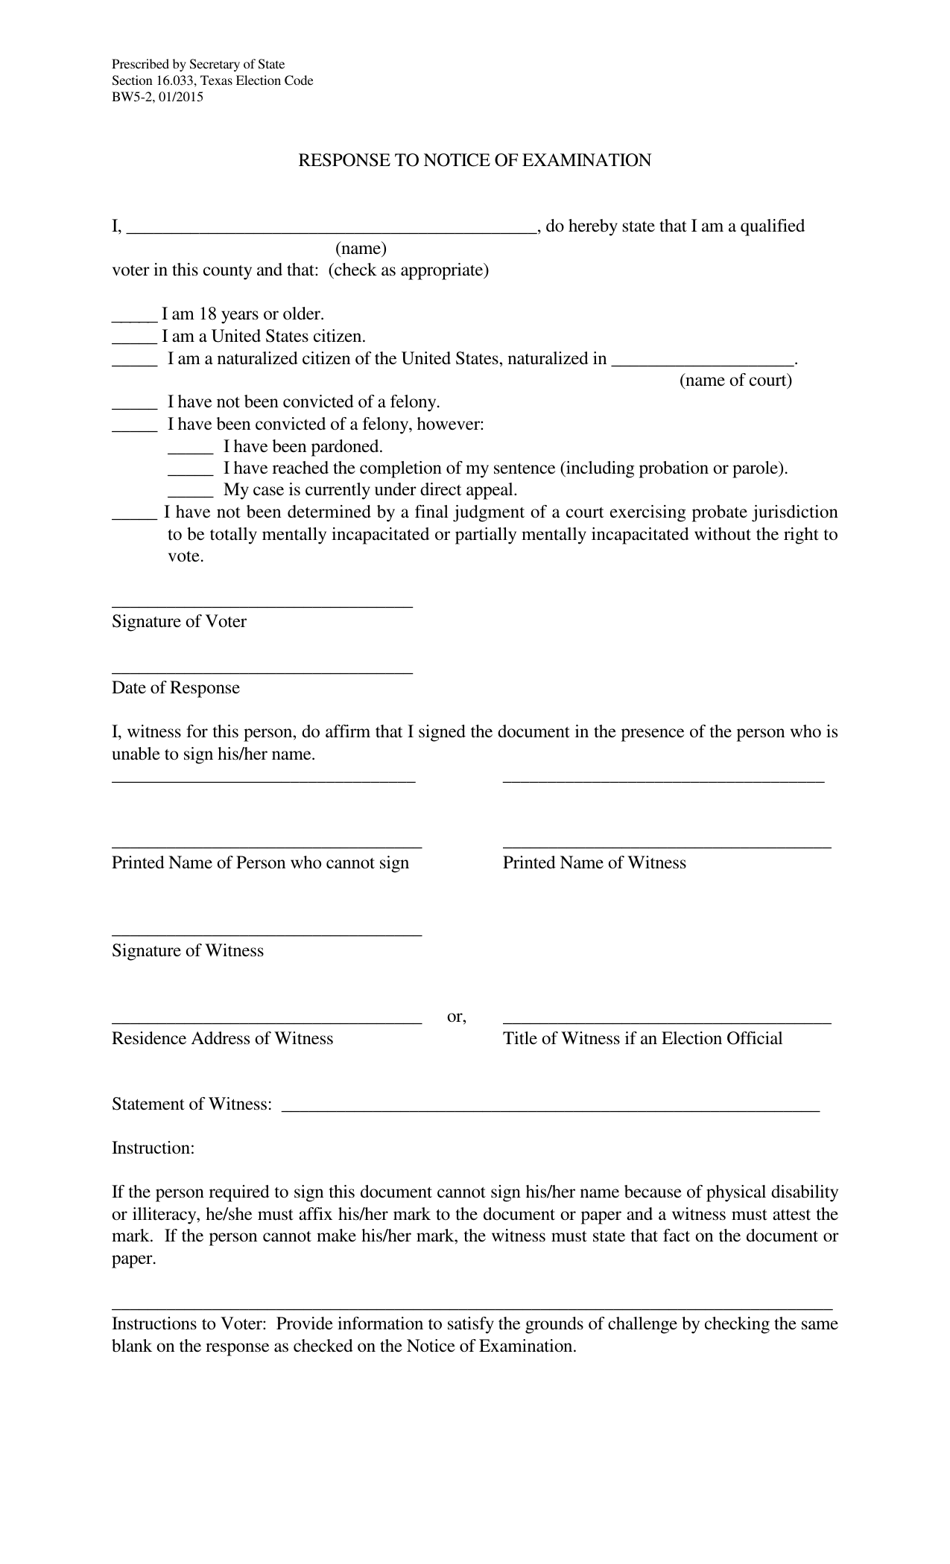 Form BW5-2 Response to Notice of Examination - Texas (English / Spanish), Page 1